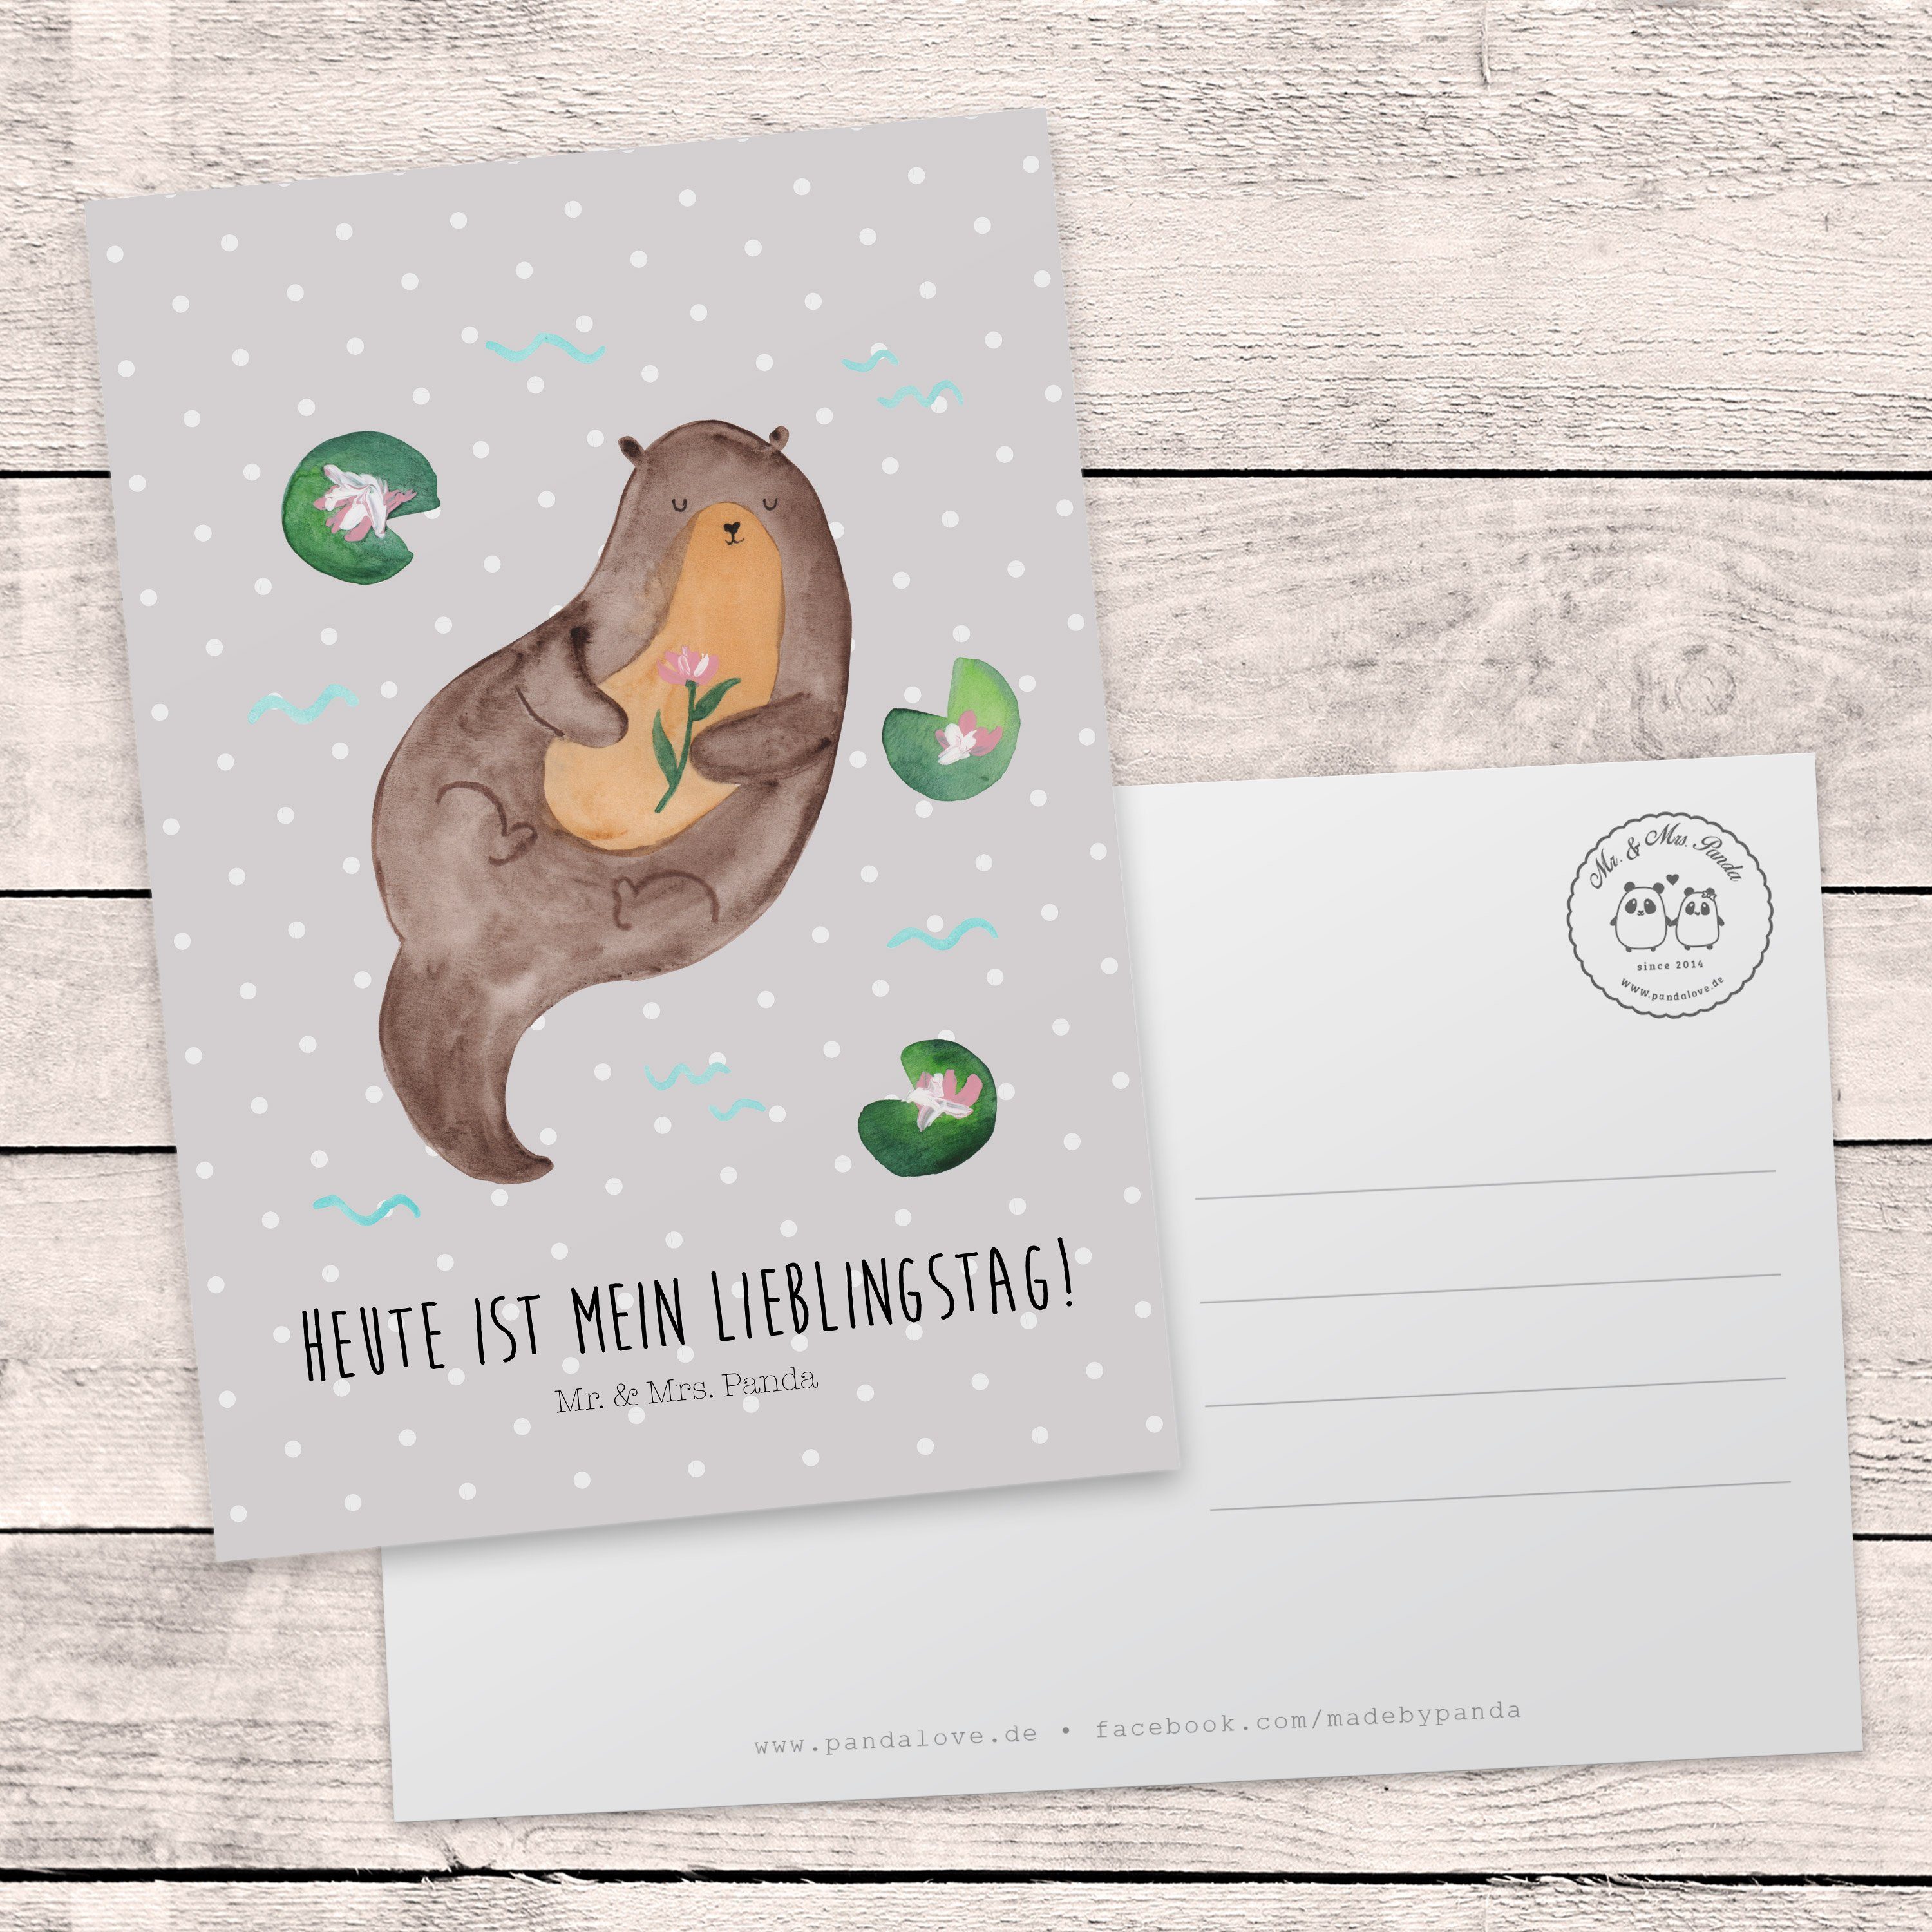 Mr. & Mrs. Panda Postkarte See Seerose Otter - Geschenk, mit Otter Pastell Grau Otter Seeotter 